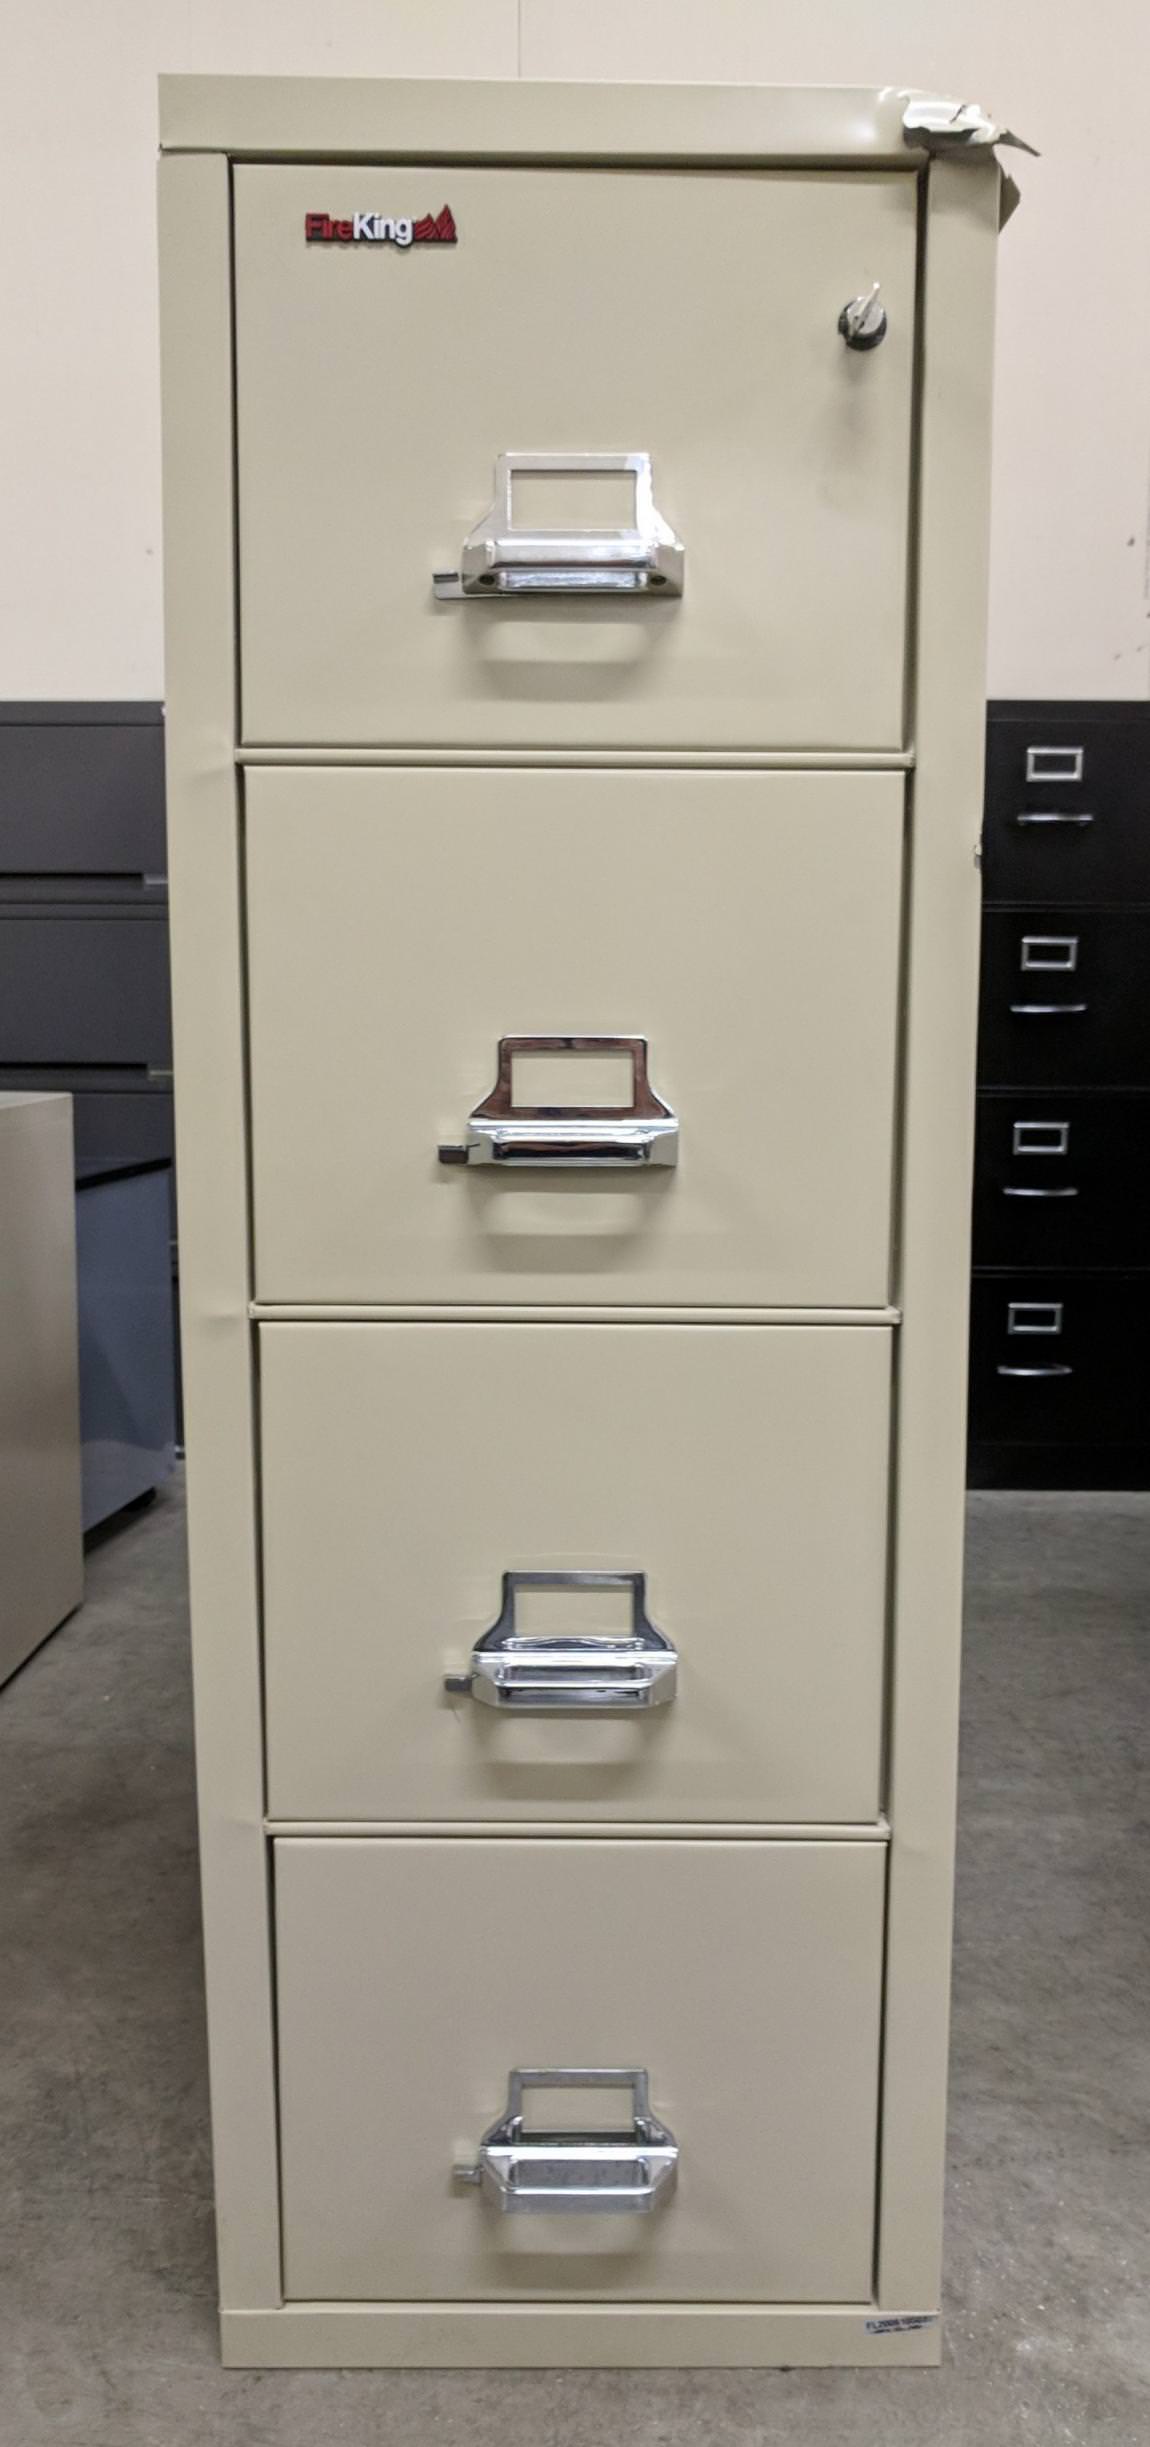 FireKing 4 Drawer Fireproof Letter Size File Cabinet